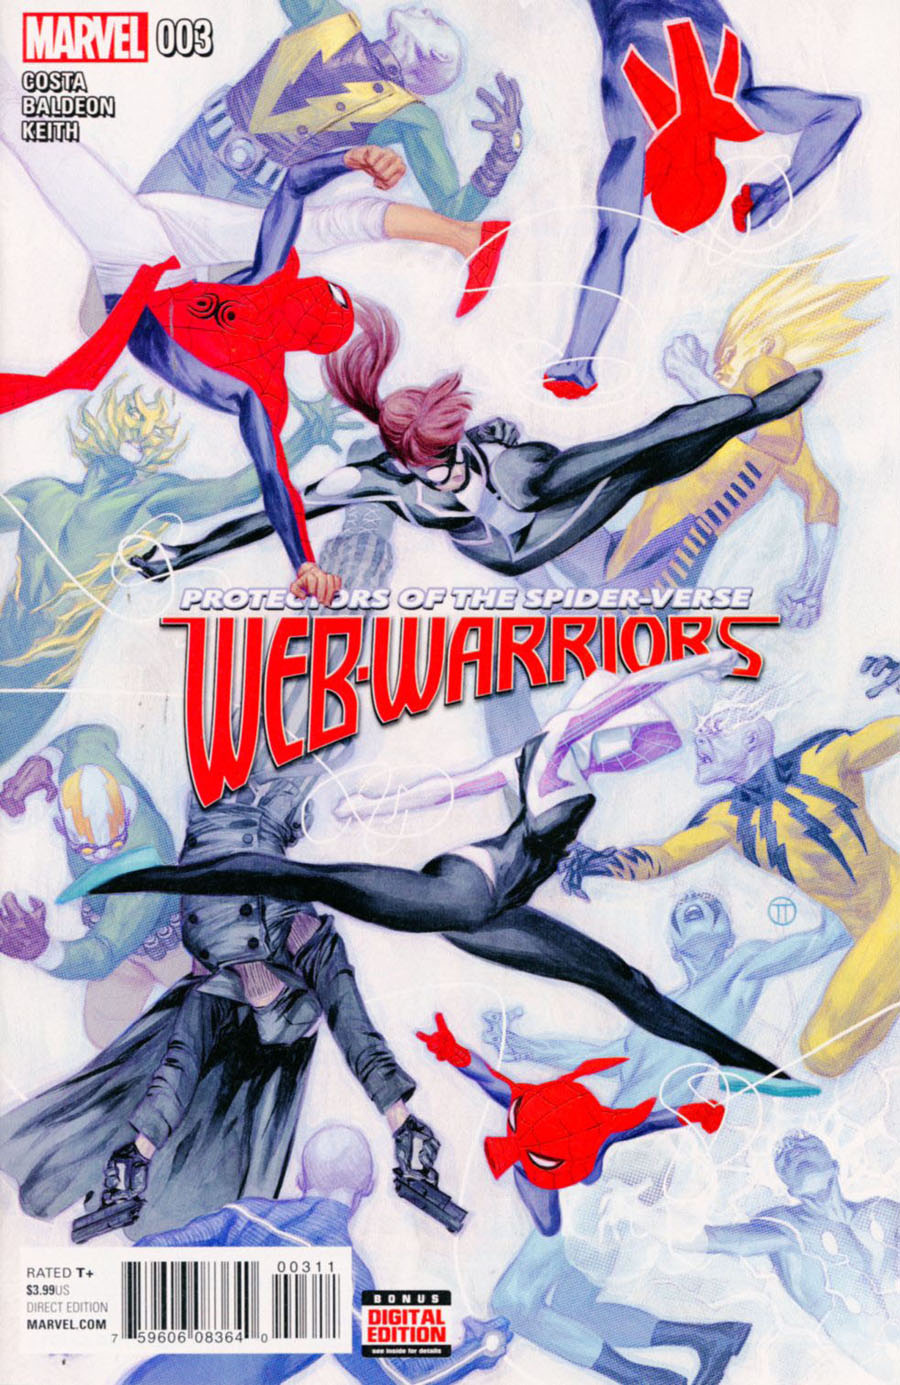 1 Electr Web Warriors of the Spider-Verse Vol Julian Totino Tedesco Michael 